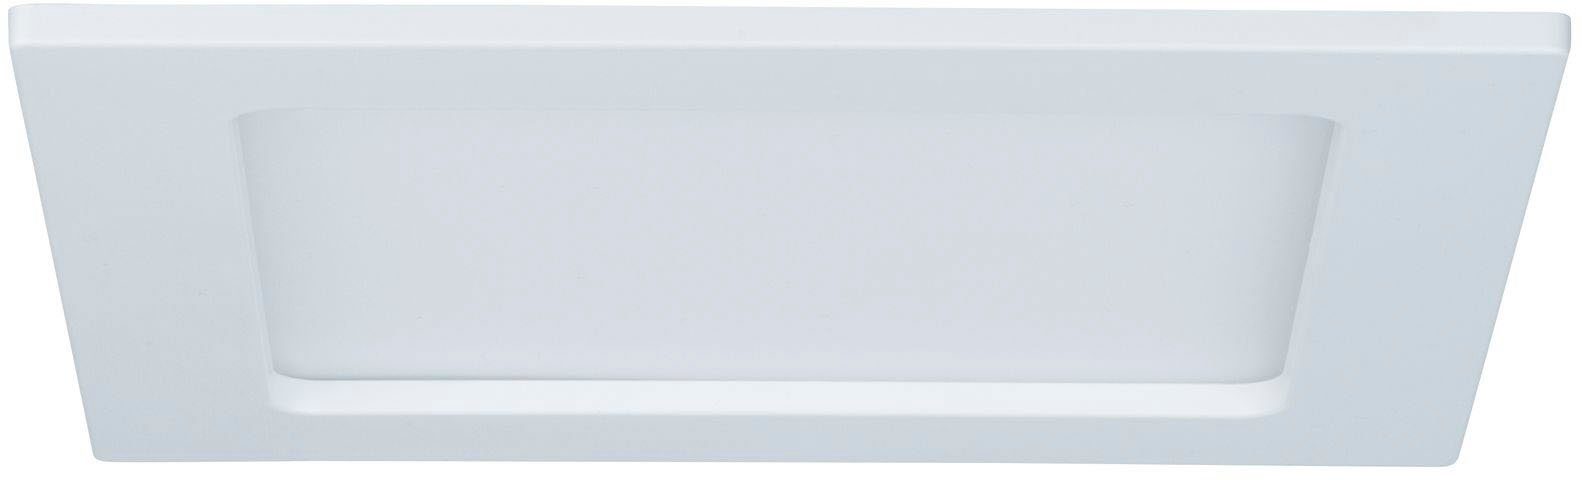 Paulmann LED Panel LED Einbaupanel eckig 165x165mm 12W 4.000K Weiß, LED  fest integriert, Neutralweiß, LED Einbaupanel eckig 165x165mm 12W 4.000K  Weiß, Satiniertes Schutzglas